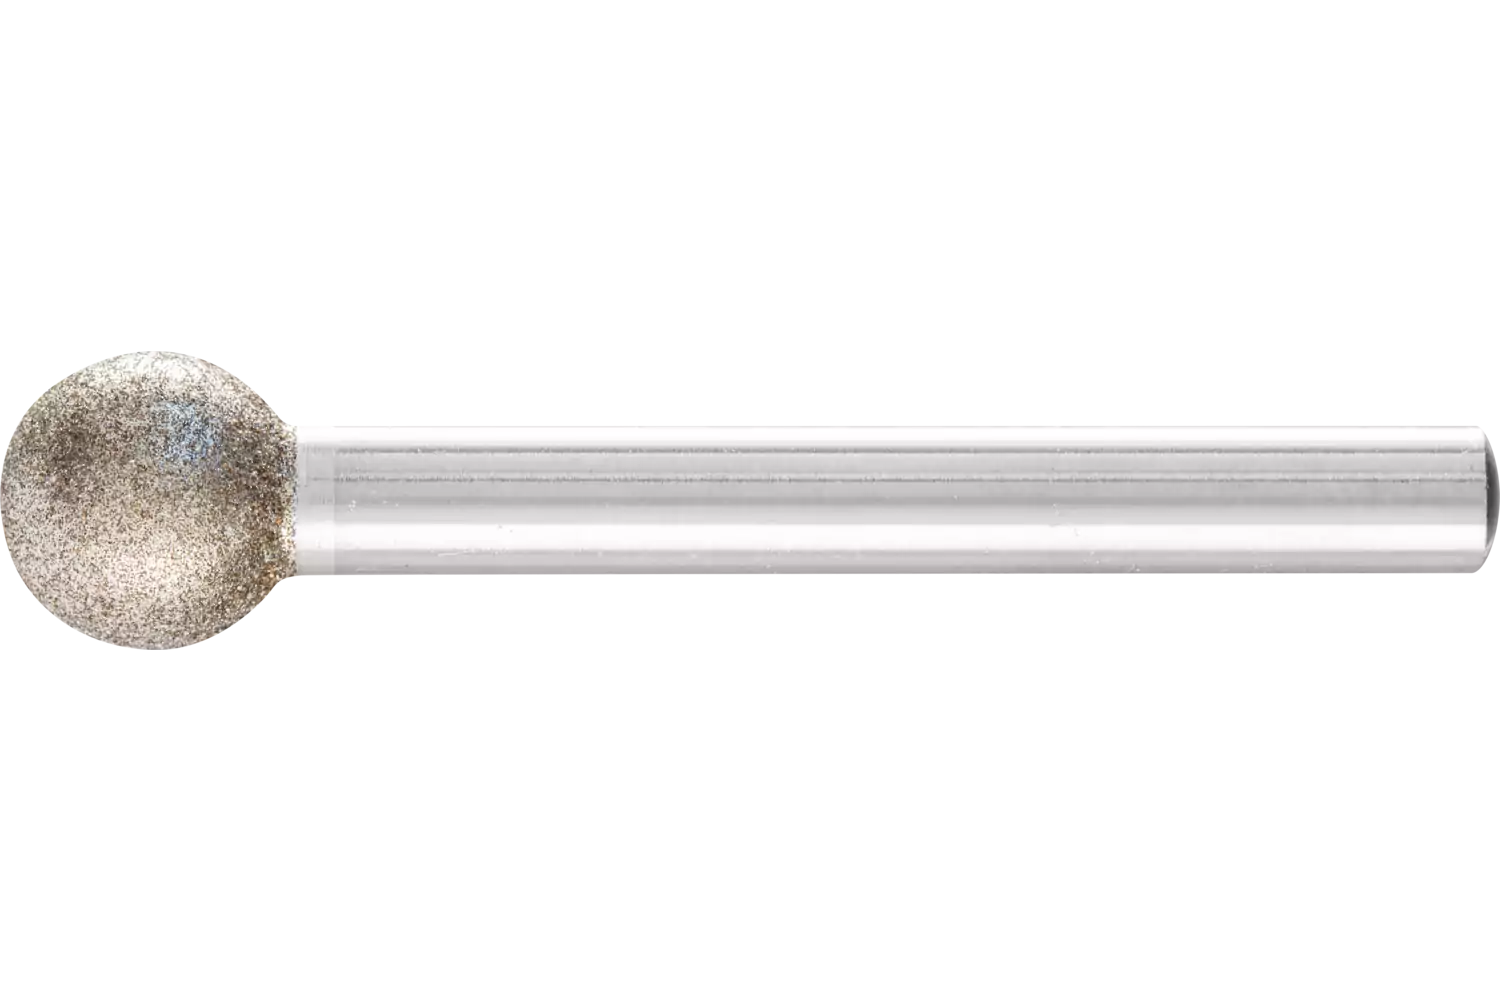 Mola abrasiva in CBN sfera Ø 12,0 mm gambo Ø 6 mm B126 (media) per incisione e sbavatura 1